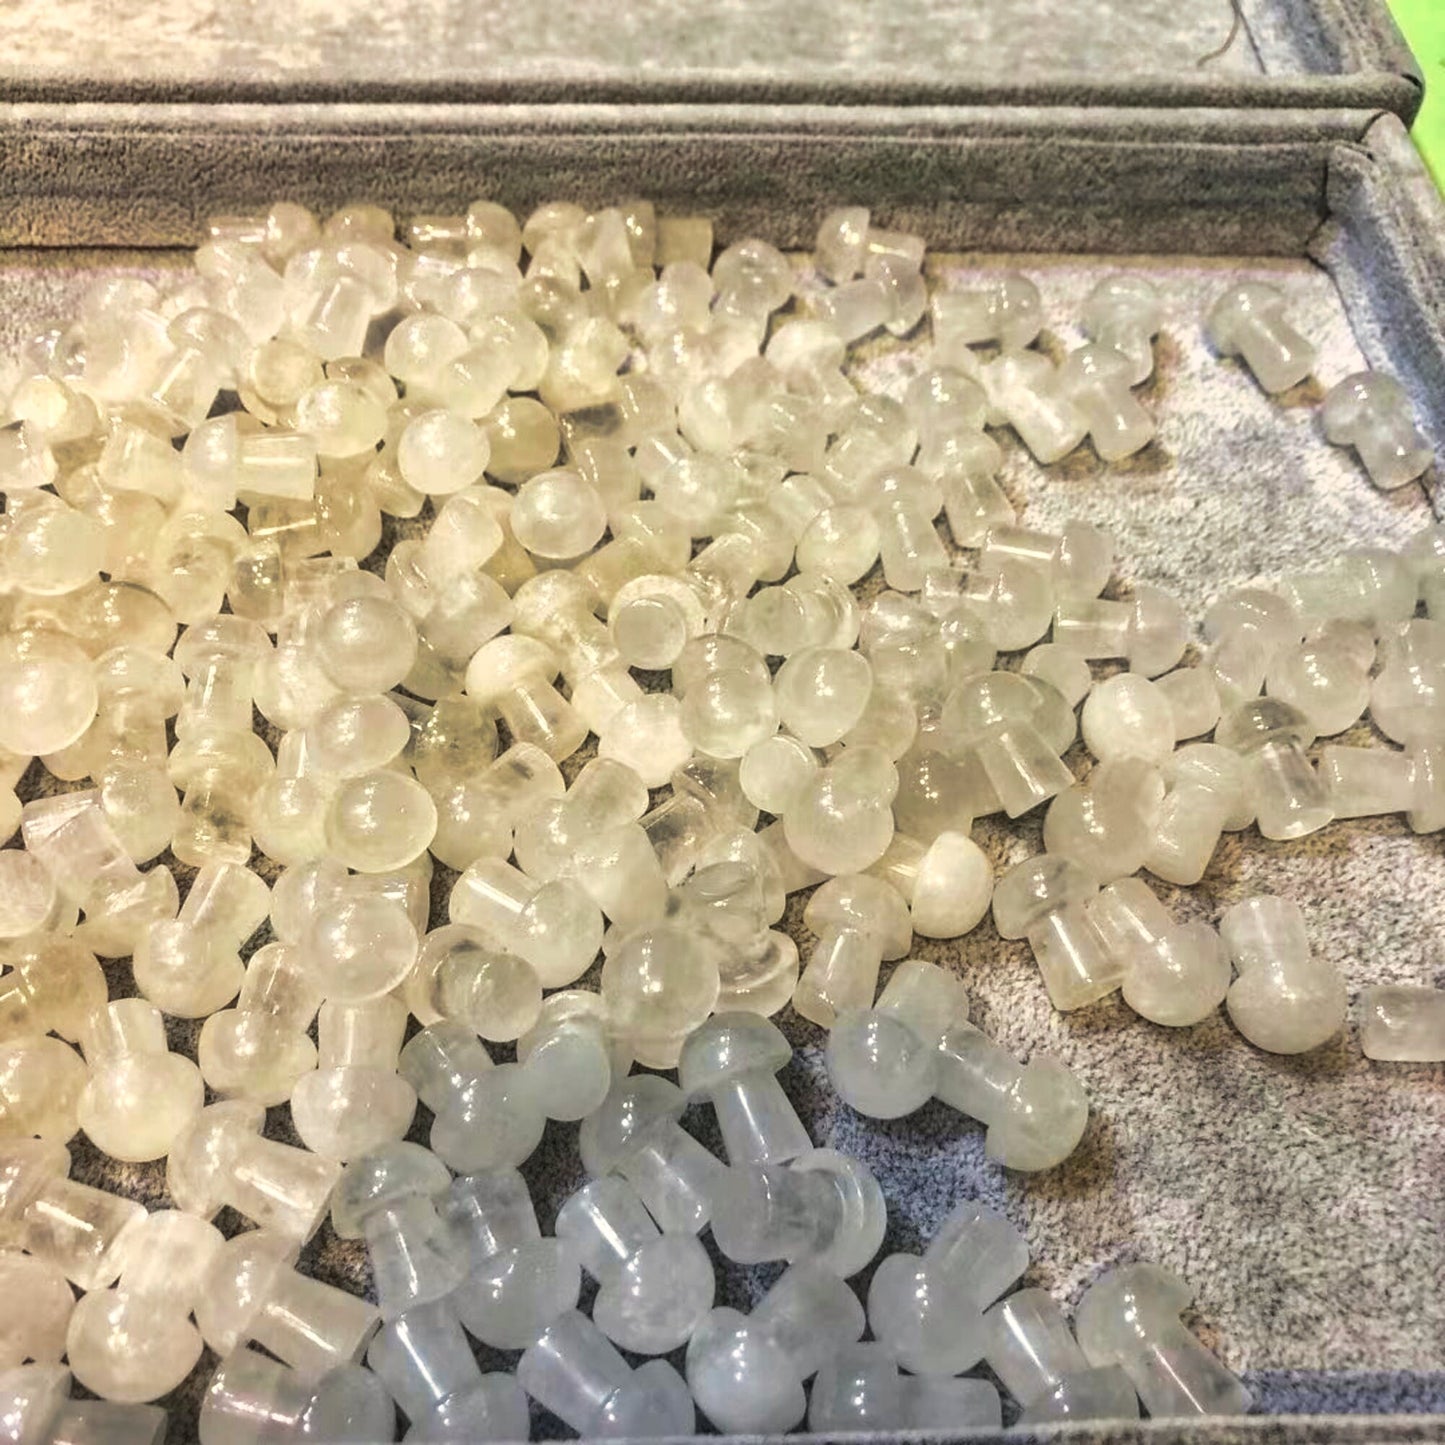 Natural White Crystal Mushroom Stone Decor - 20pcs Polished Healing Gift